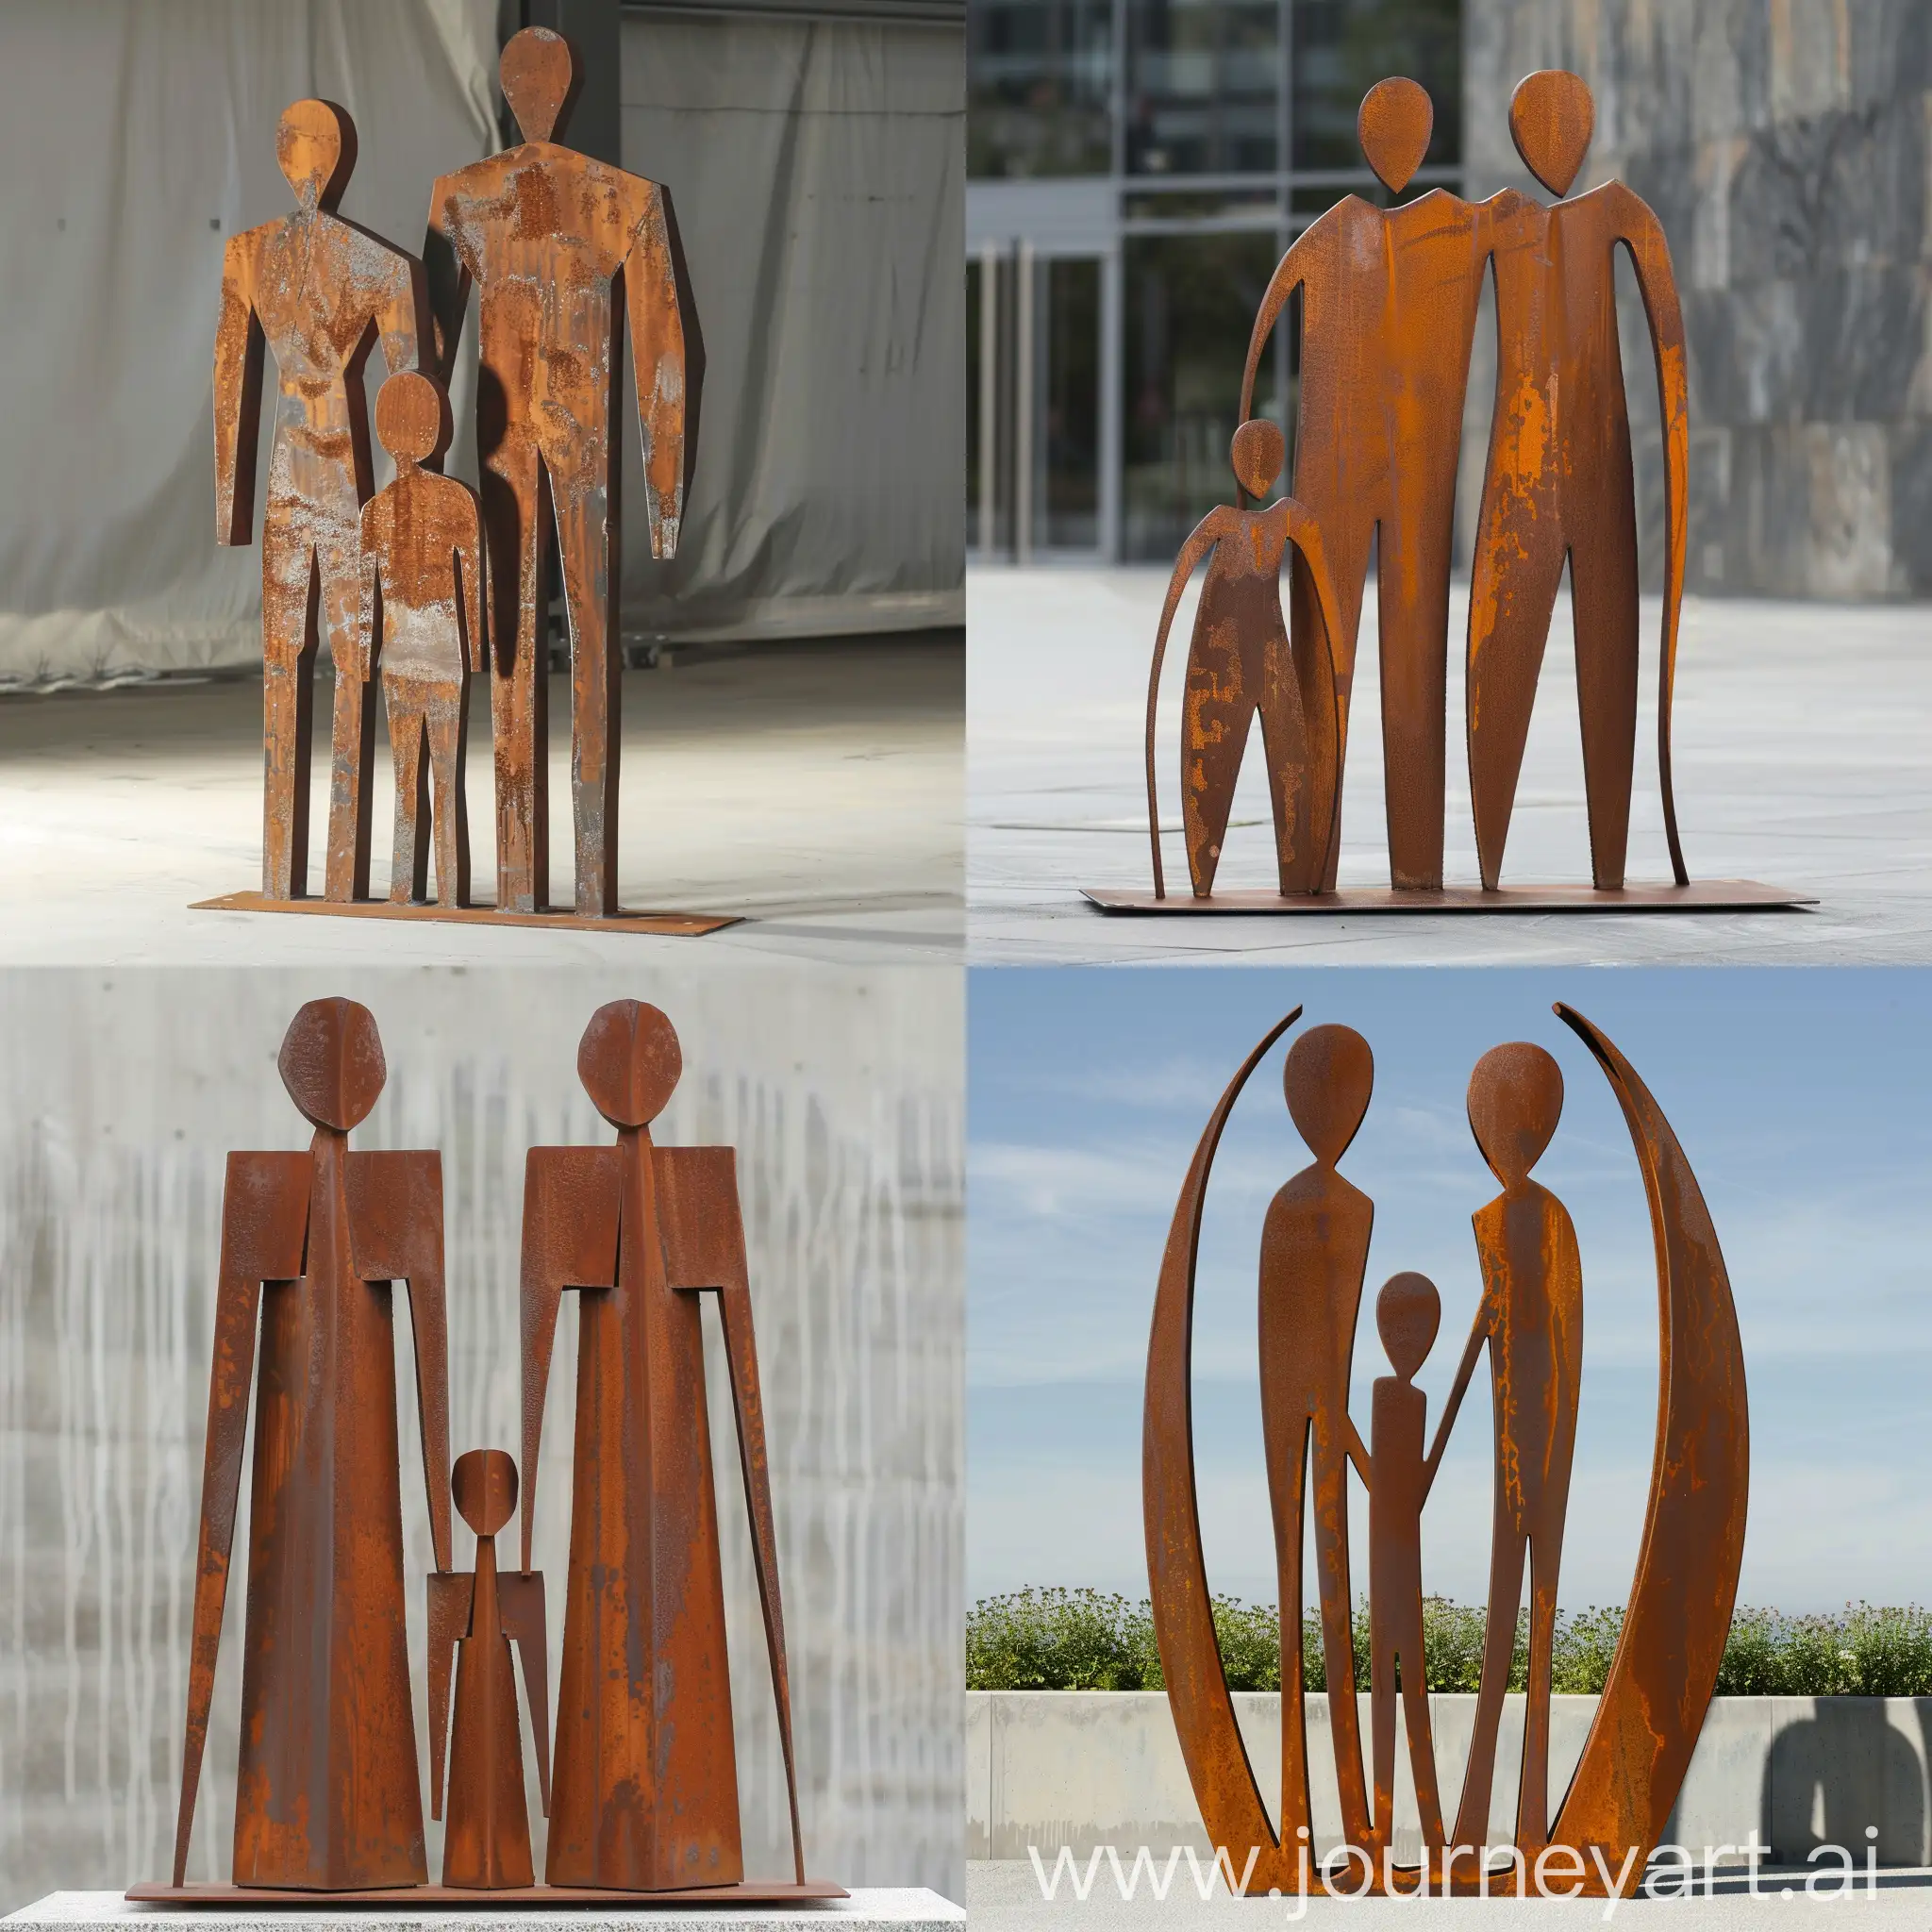 Rusty-Steel-Family-Sculpture-Four-Figures-in-Public-Art